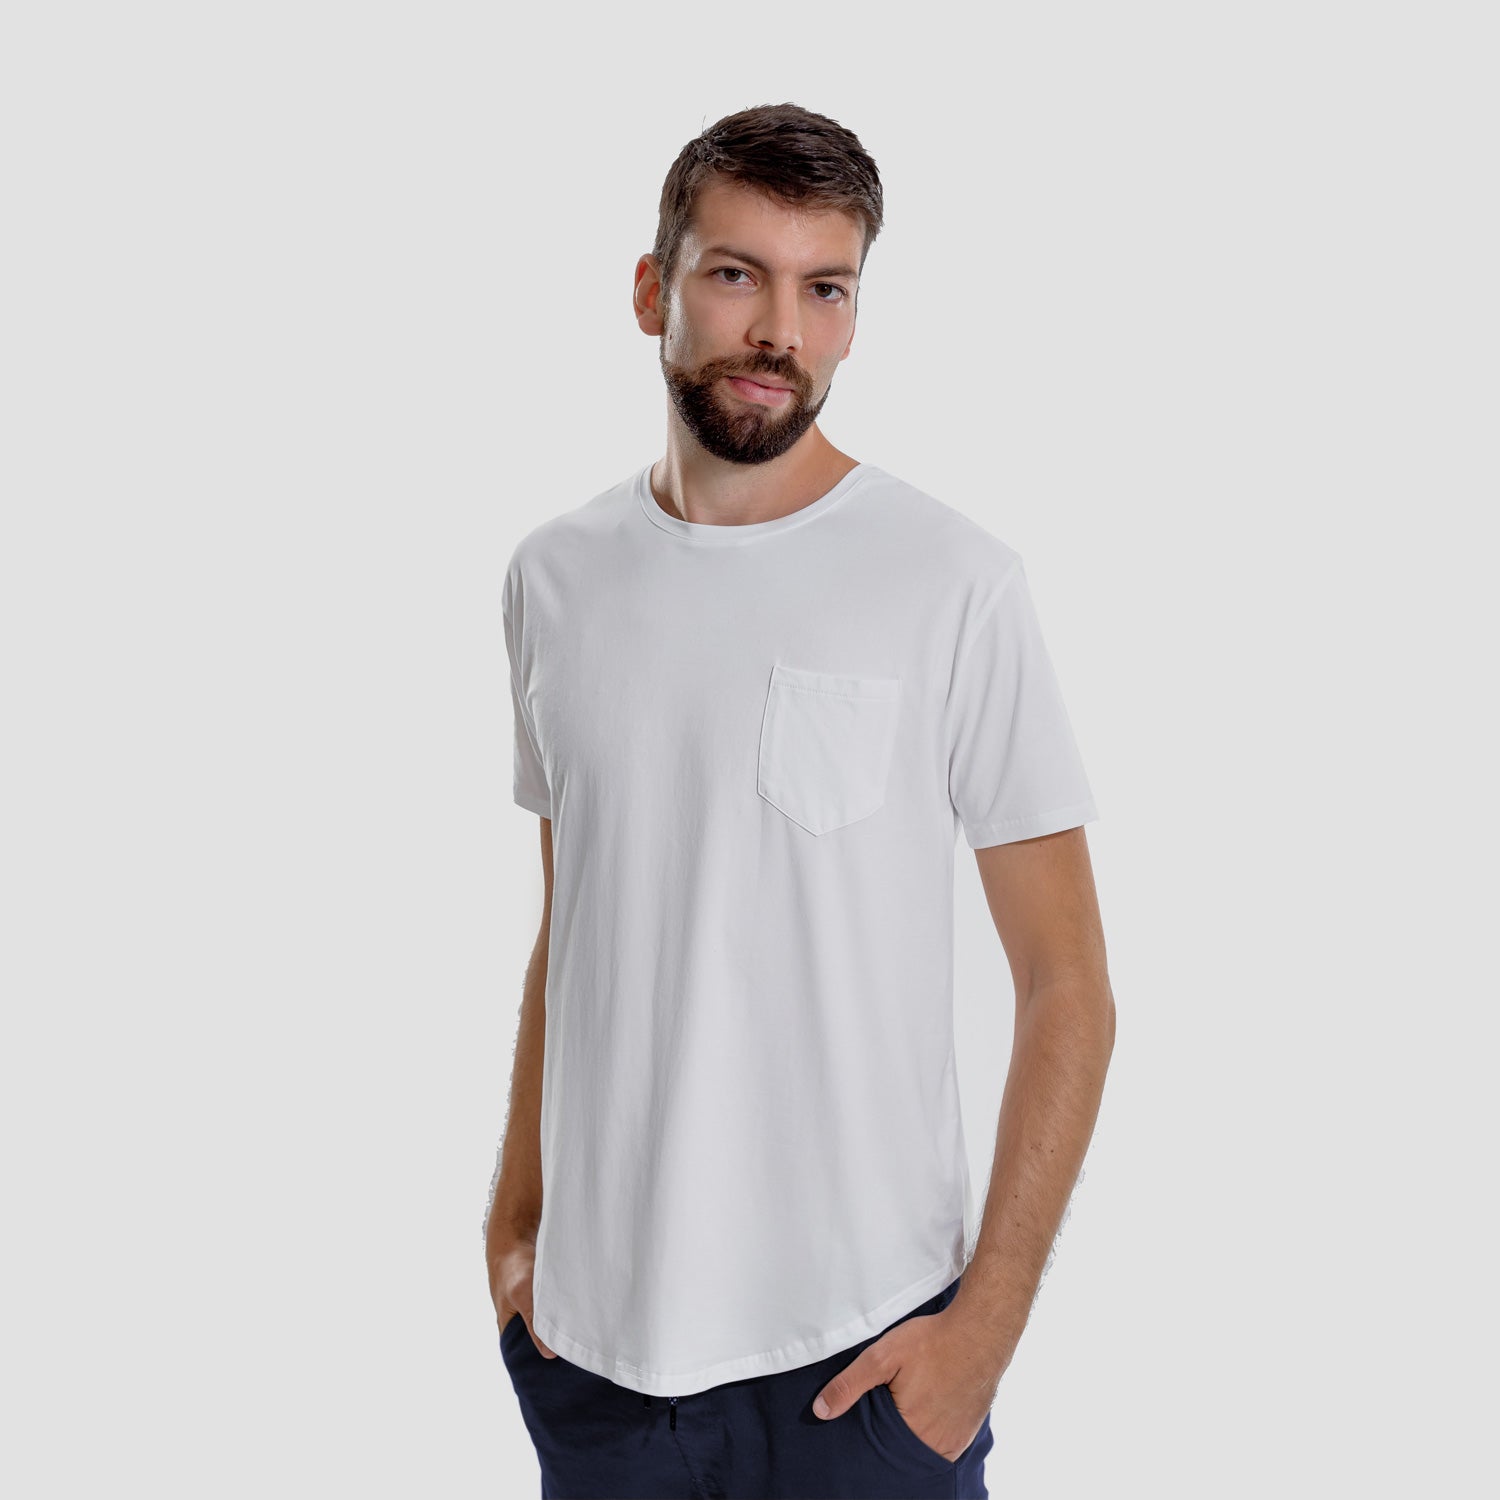 White T-shirt, front pocket, short sleeves, Al Sadu, Print, rounded bottom, modern, Man, front view, model